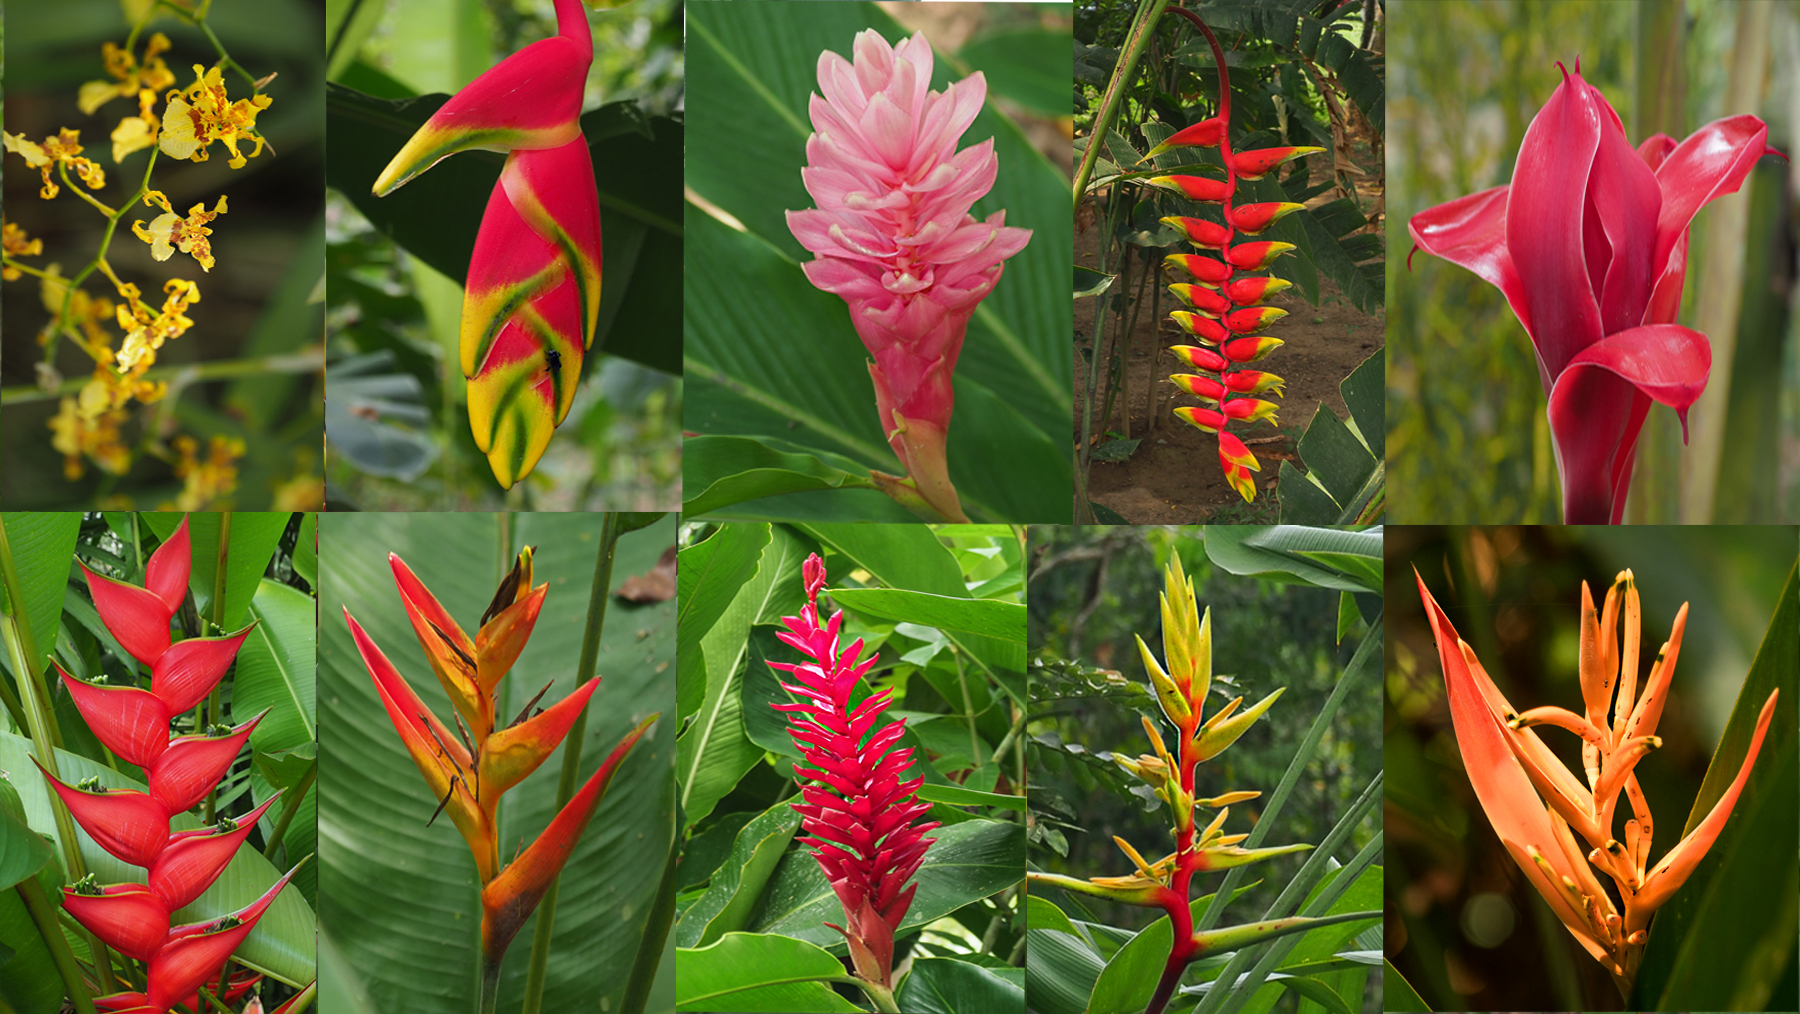 Dschungel-Blumen, fast alle rot